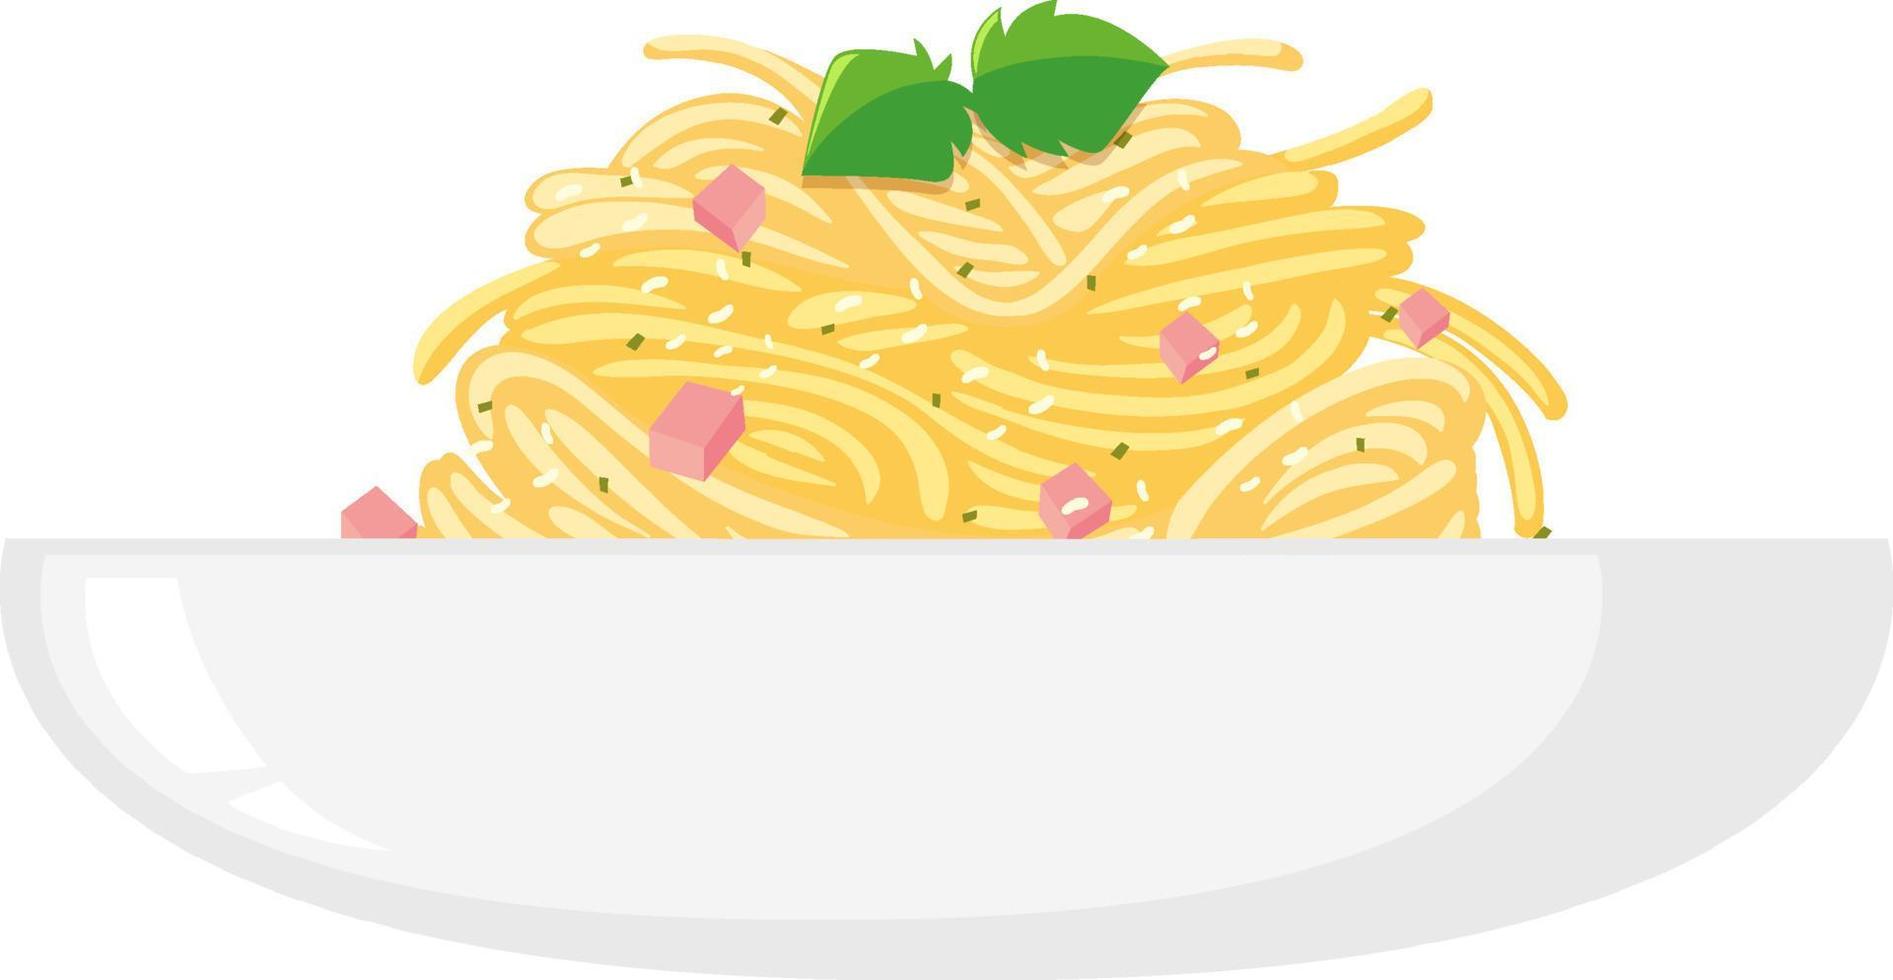 spaghetti carbonara in een kom vector